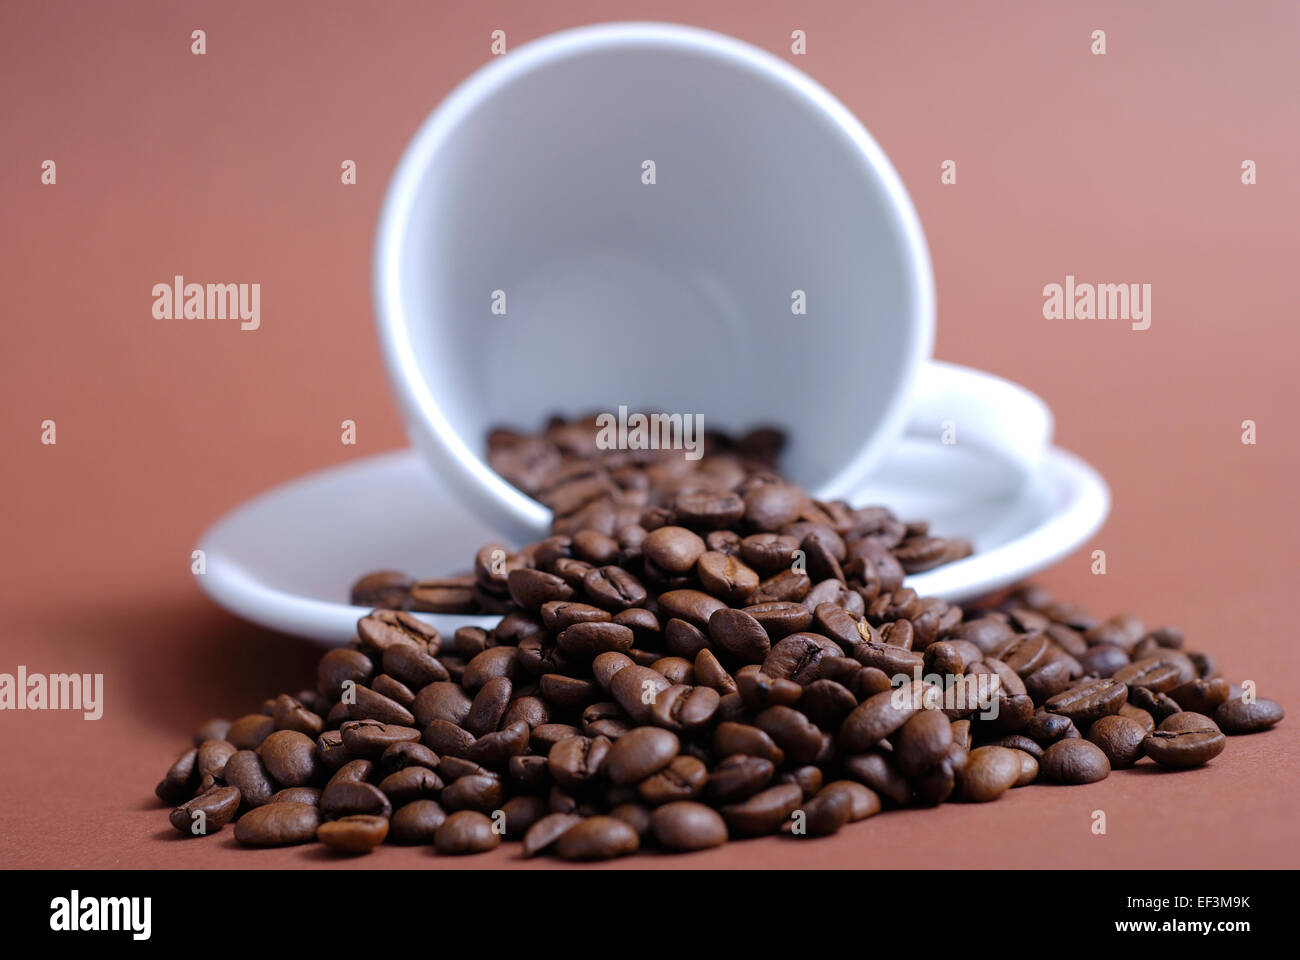 Tasse mit Kaffeebohnen / coffee mug with coffee beans Stock Photo